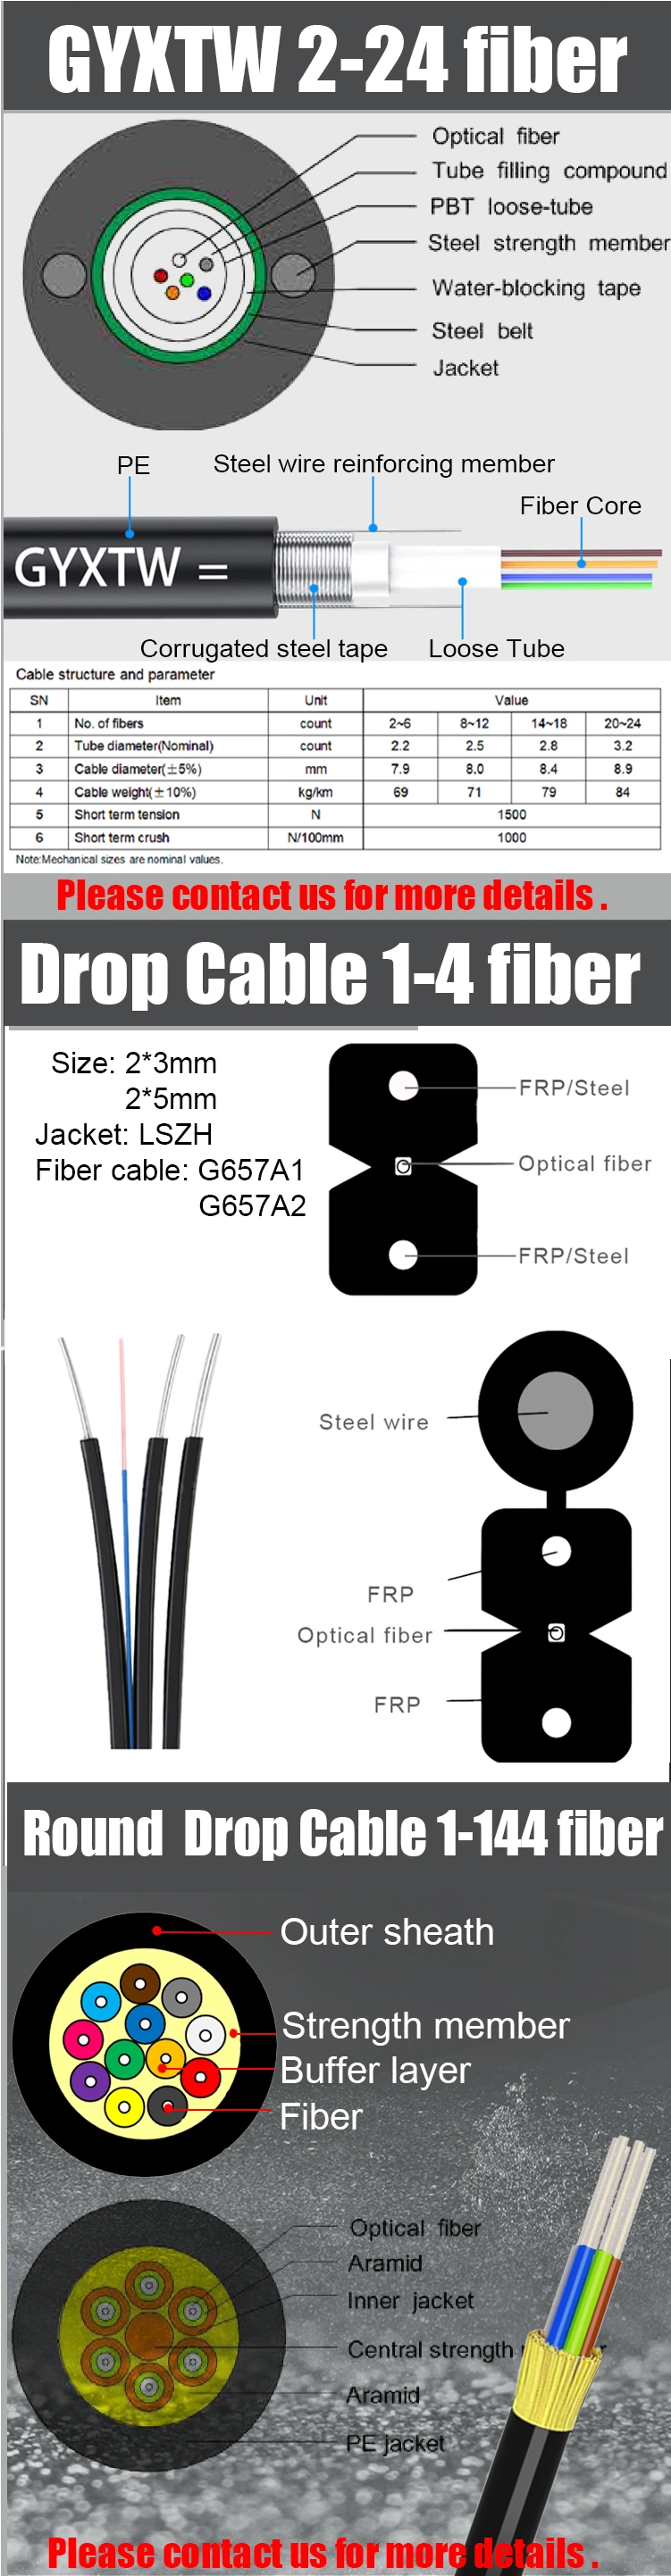 Gcabling Fiber Optic ADSS GYXTW GYTS FTTH Fiber Drop Cable with 1 /2 /6/ 12 /24 /48 Cores